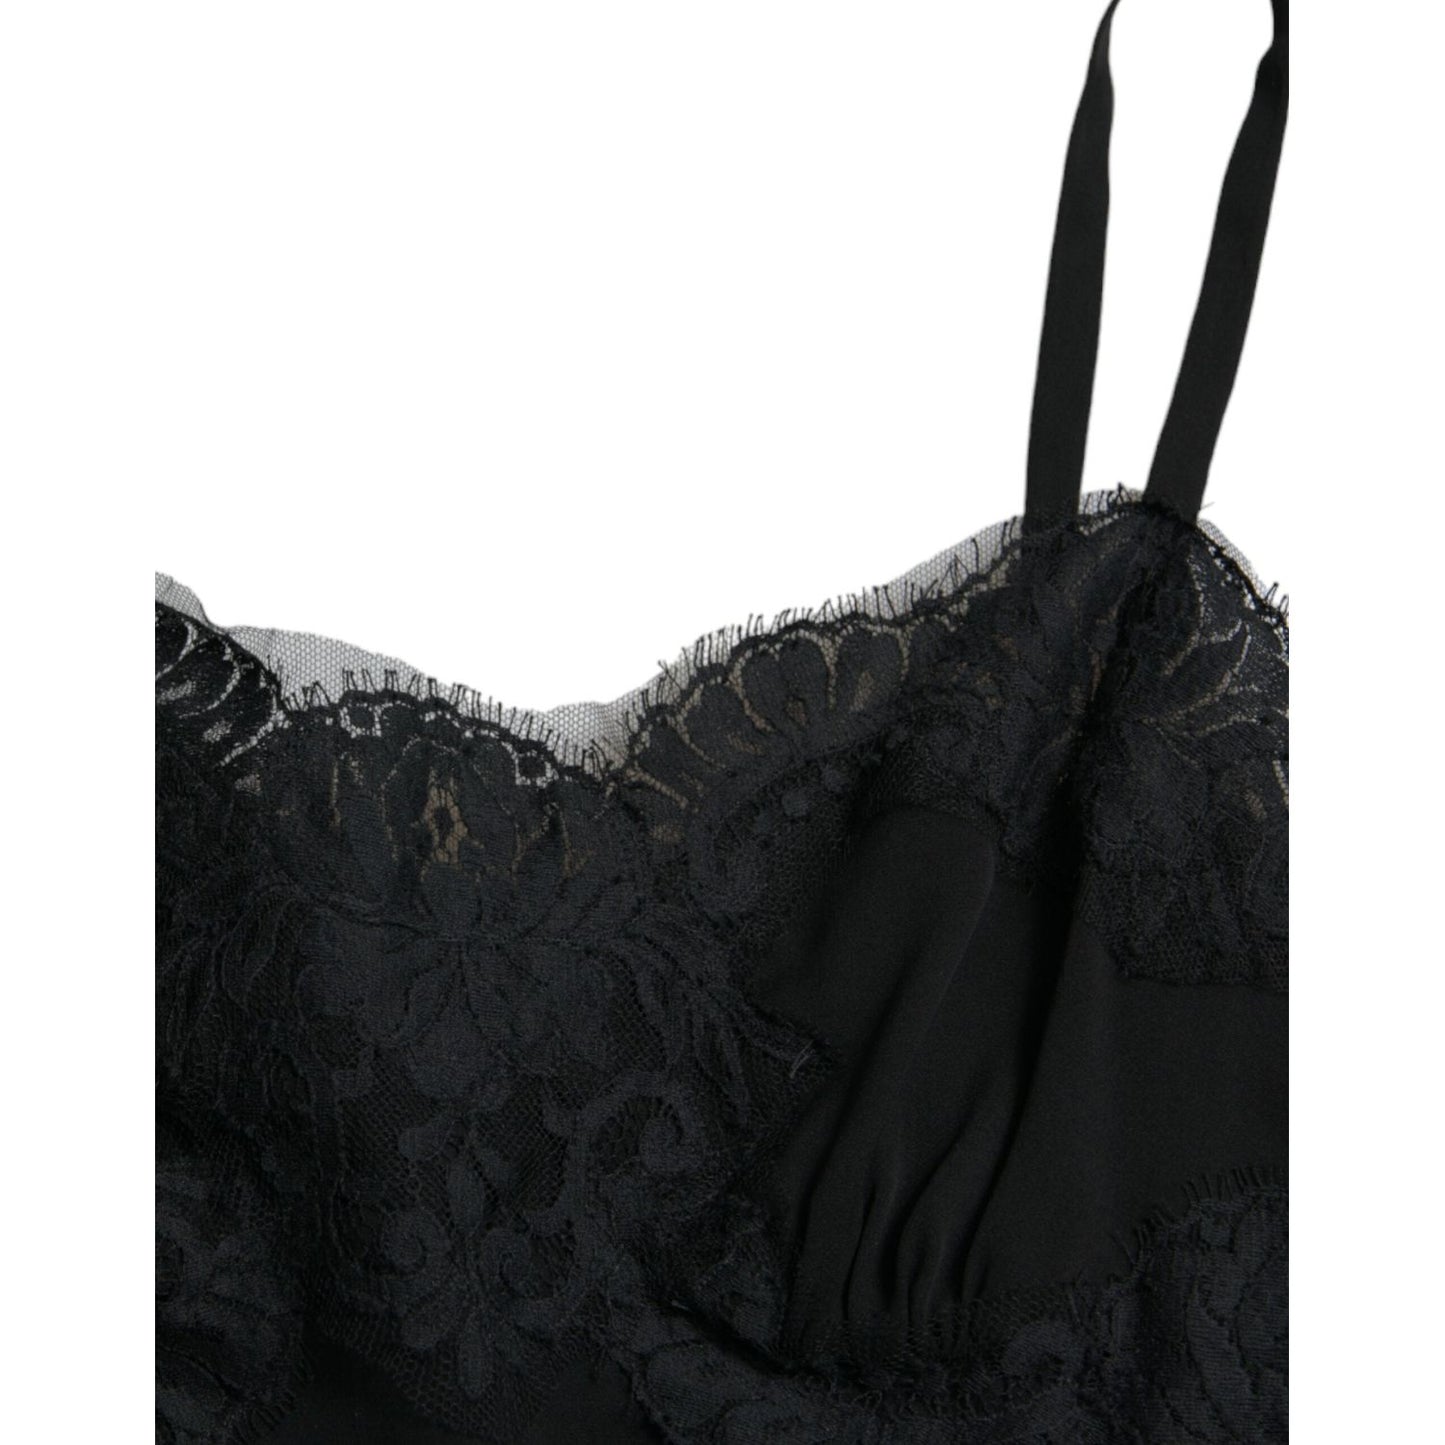 Dolce & Gabbana Elegant Black Silk Lace Tank Top black-silk-stretch-lace-sleeveless-tank-top